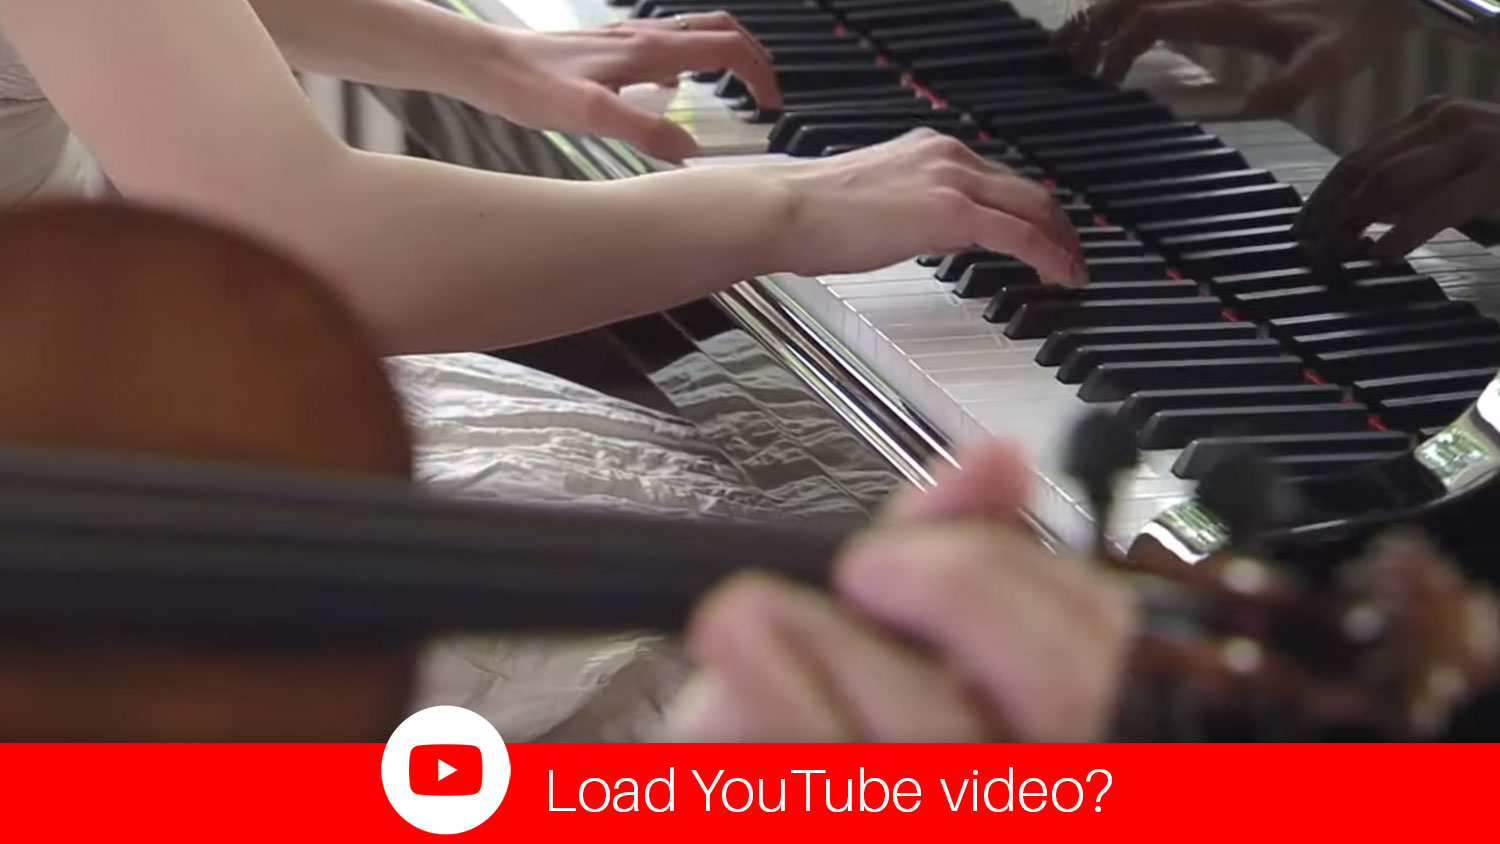 YouTube Video Morgenstern Trio - Ludwig van Beethoven: Piano Trio in B-flat Major op. 97